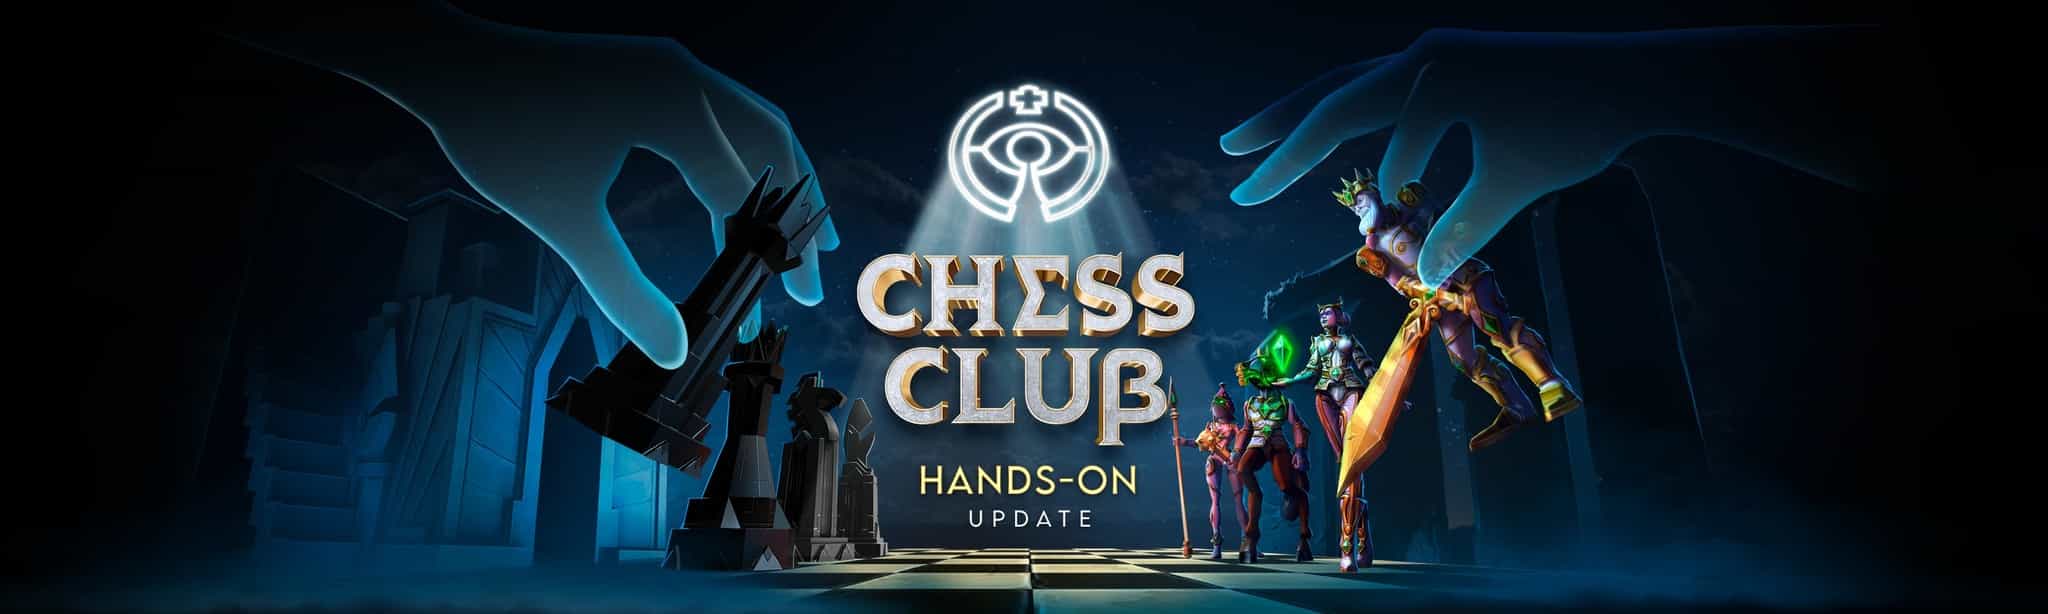 Oculus Quest 游戏《Chess Club VR》国际象棋